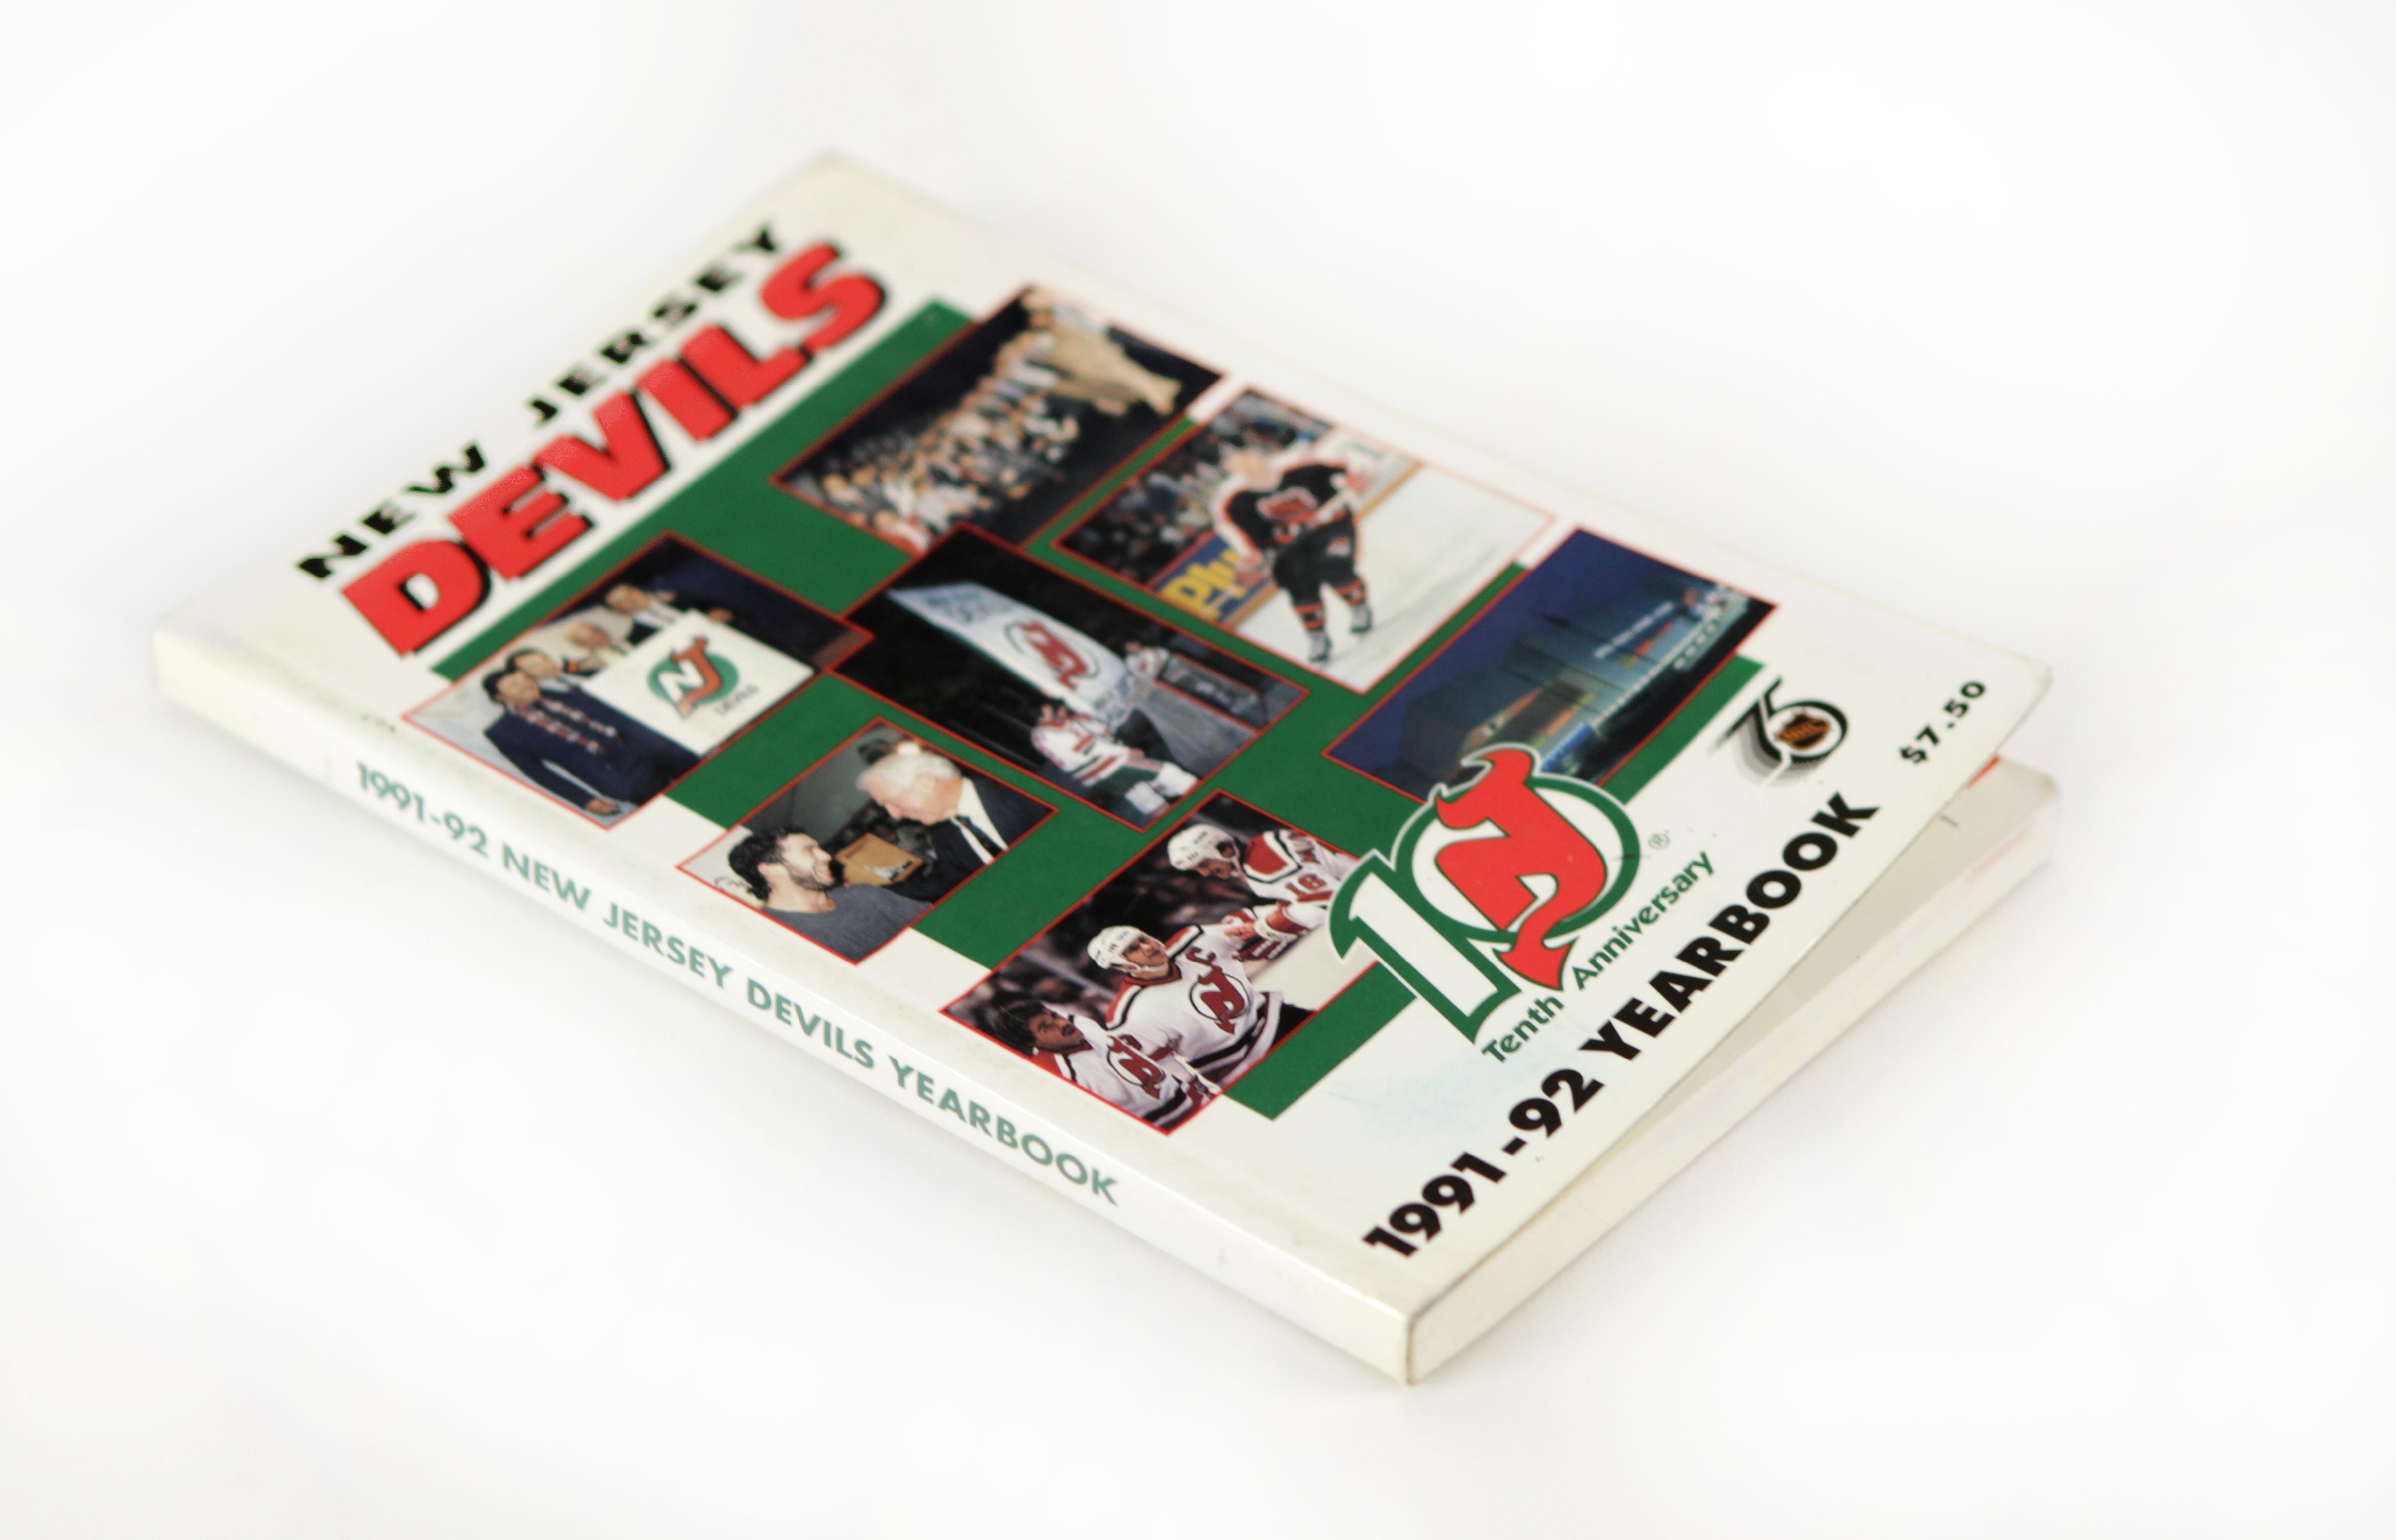 New Jersey Devils 1991-92